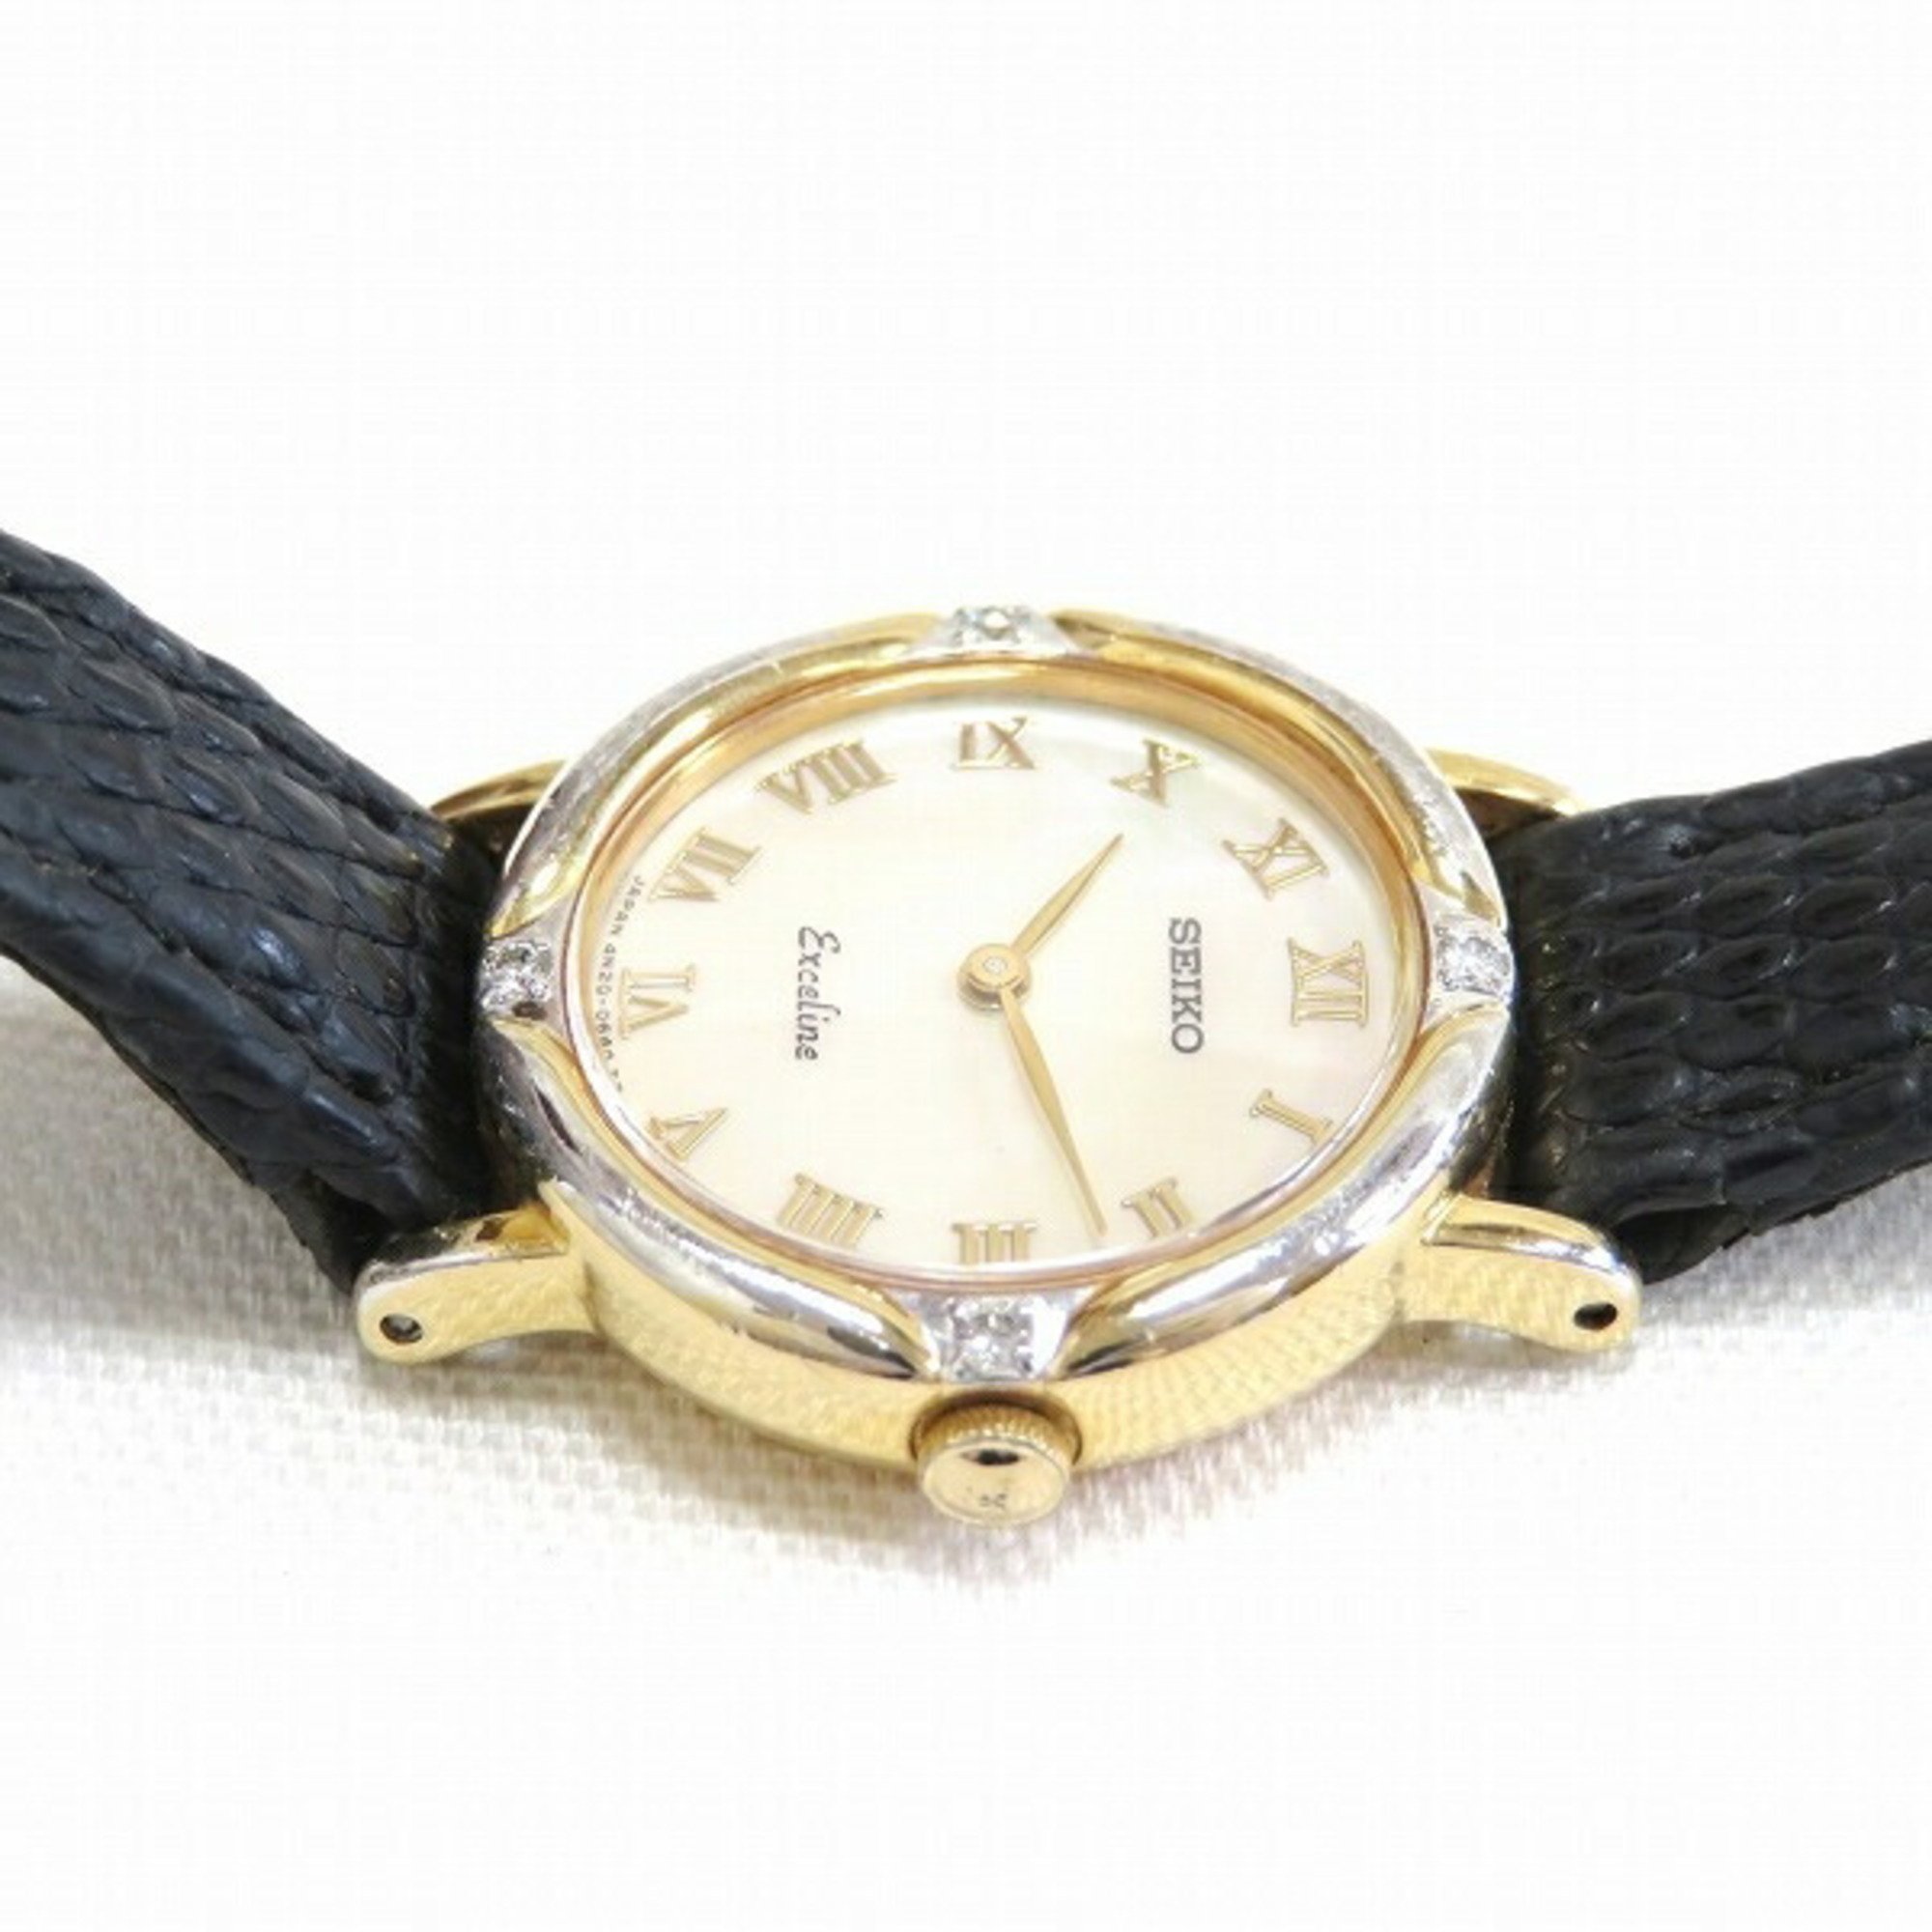 Seiko Excelline 4N20-0370 Quartz Watch Ladies Bezel Diamond